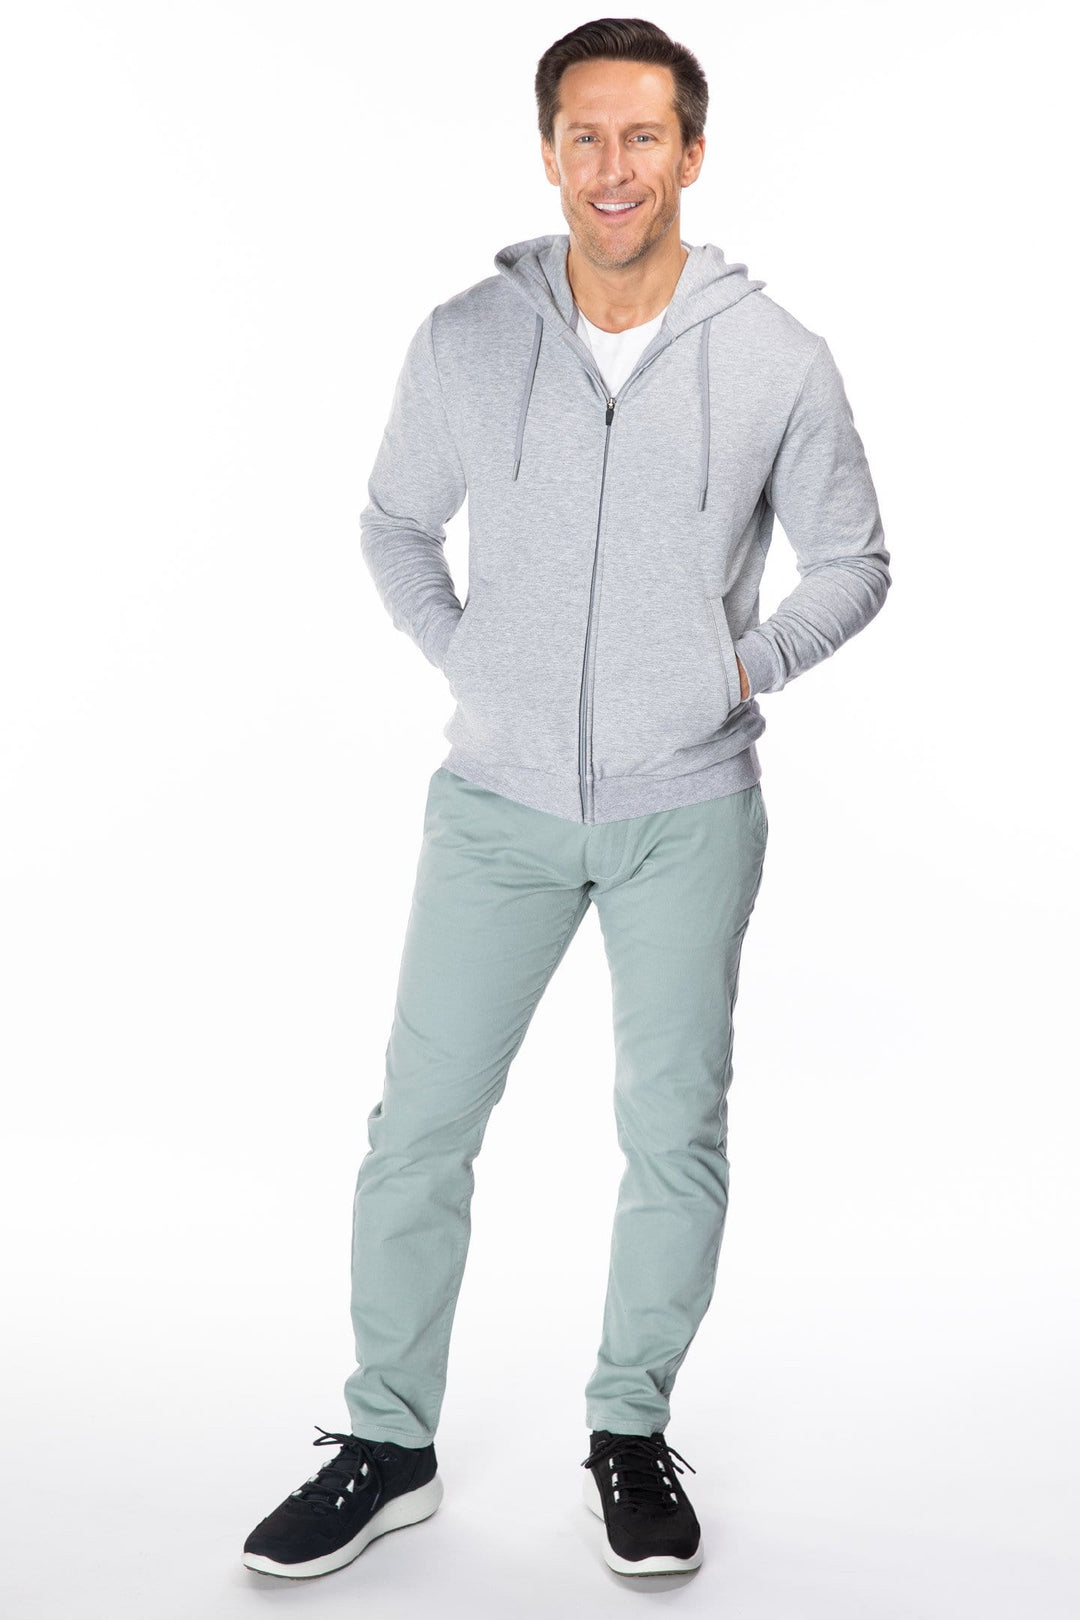 Buy Light Grey French Terry Full-Zip Hoodie for Short Men | Ash & Erie   Roam Hoodie